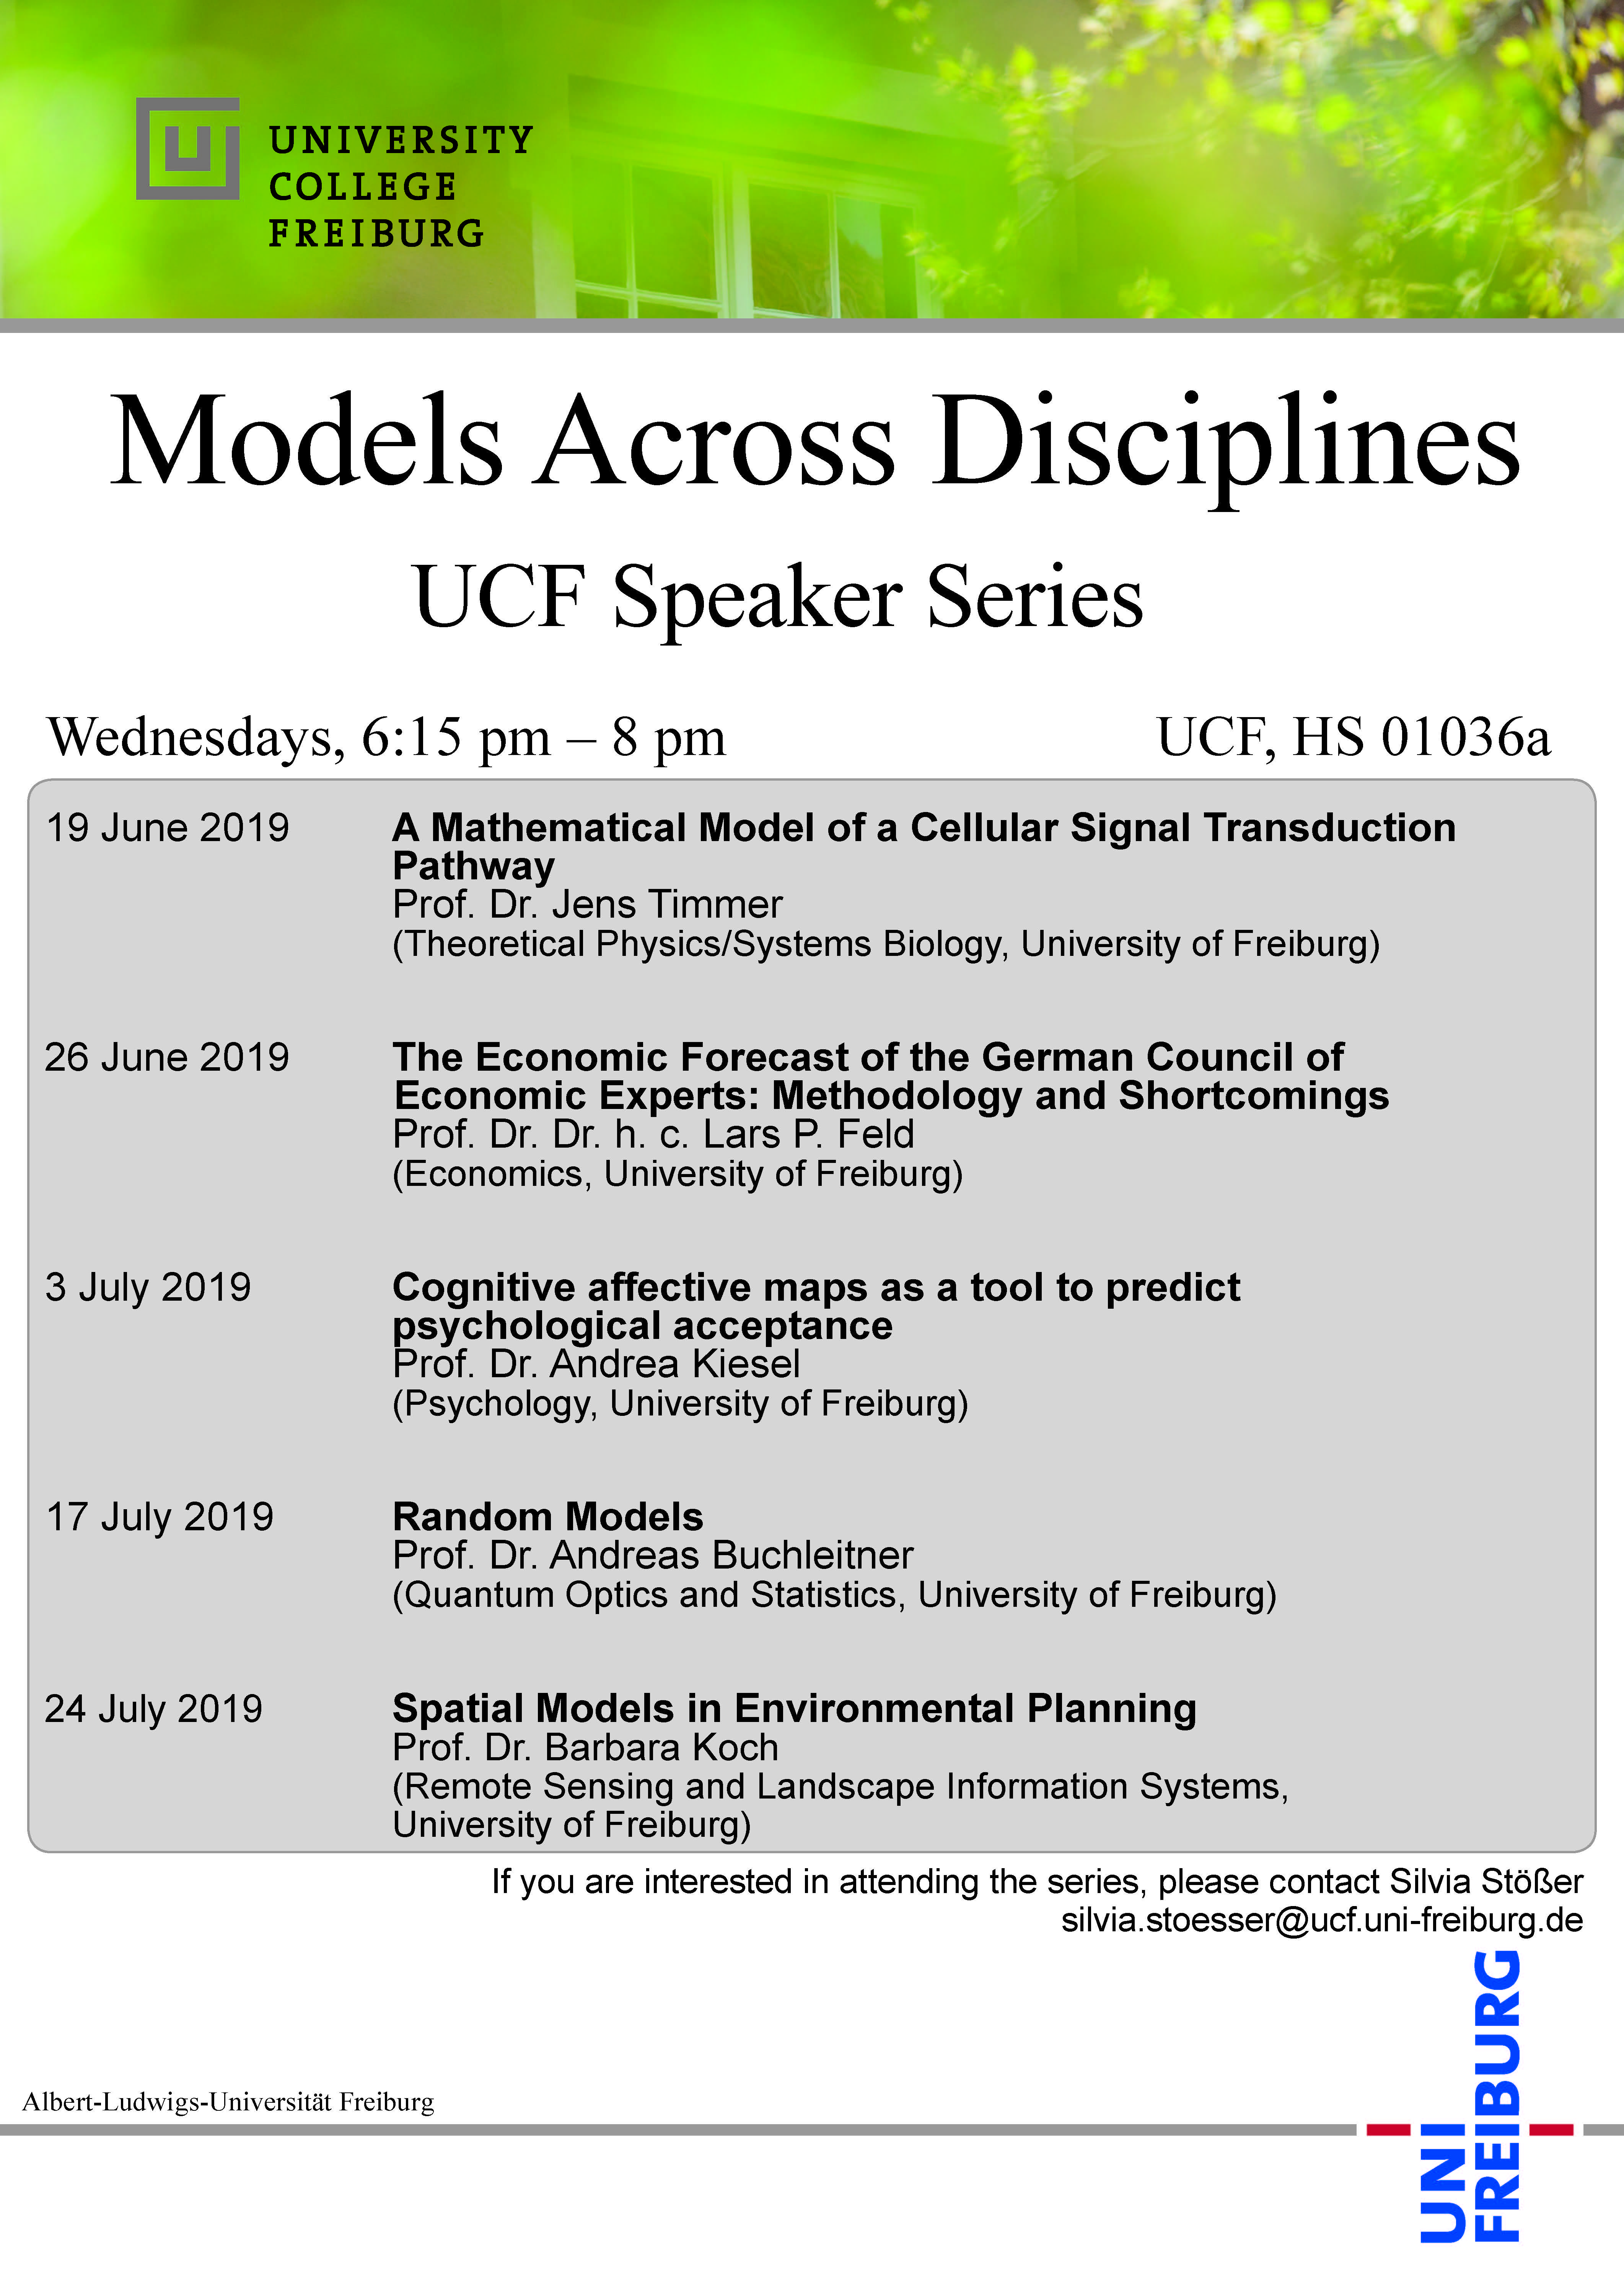 UCF Speaker Series on Models